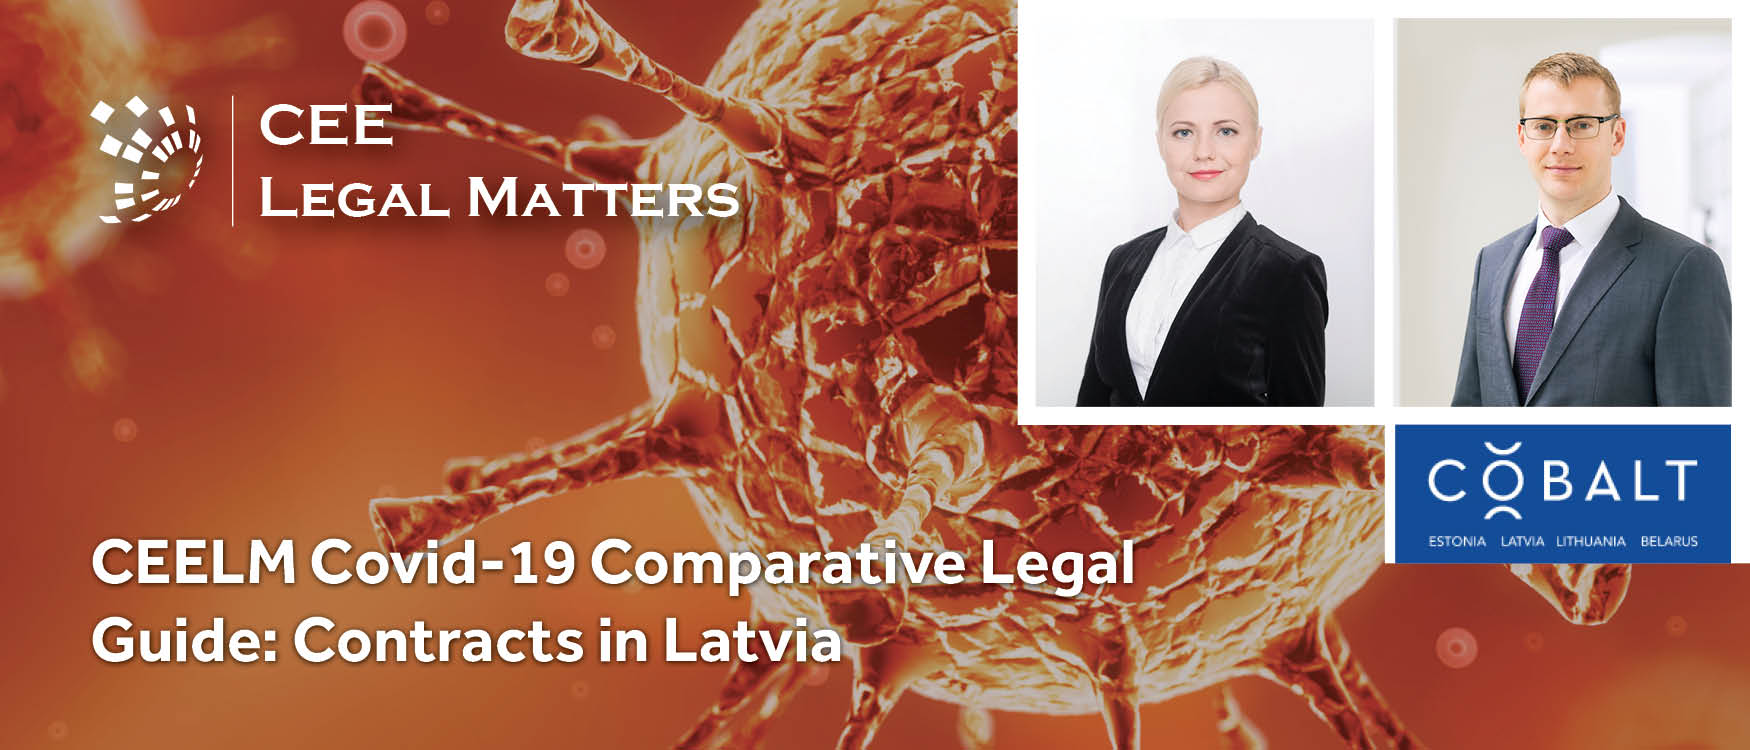 CEELM Covid-19 Comparative Legal Guide: Contracts in Latvia